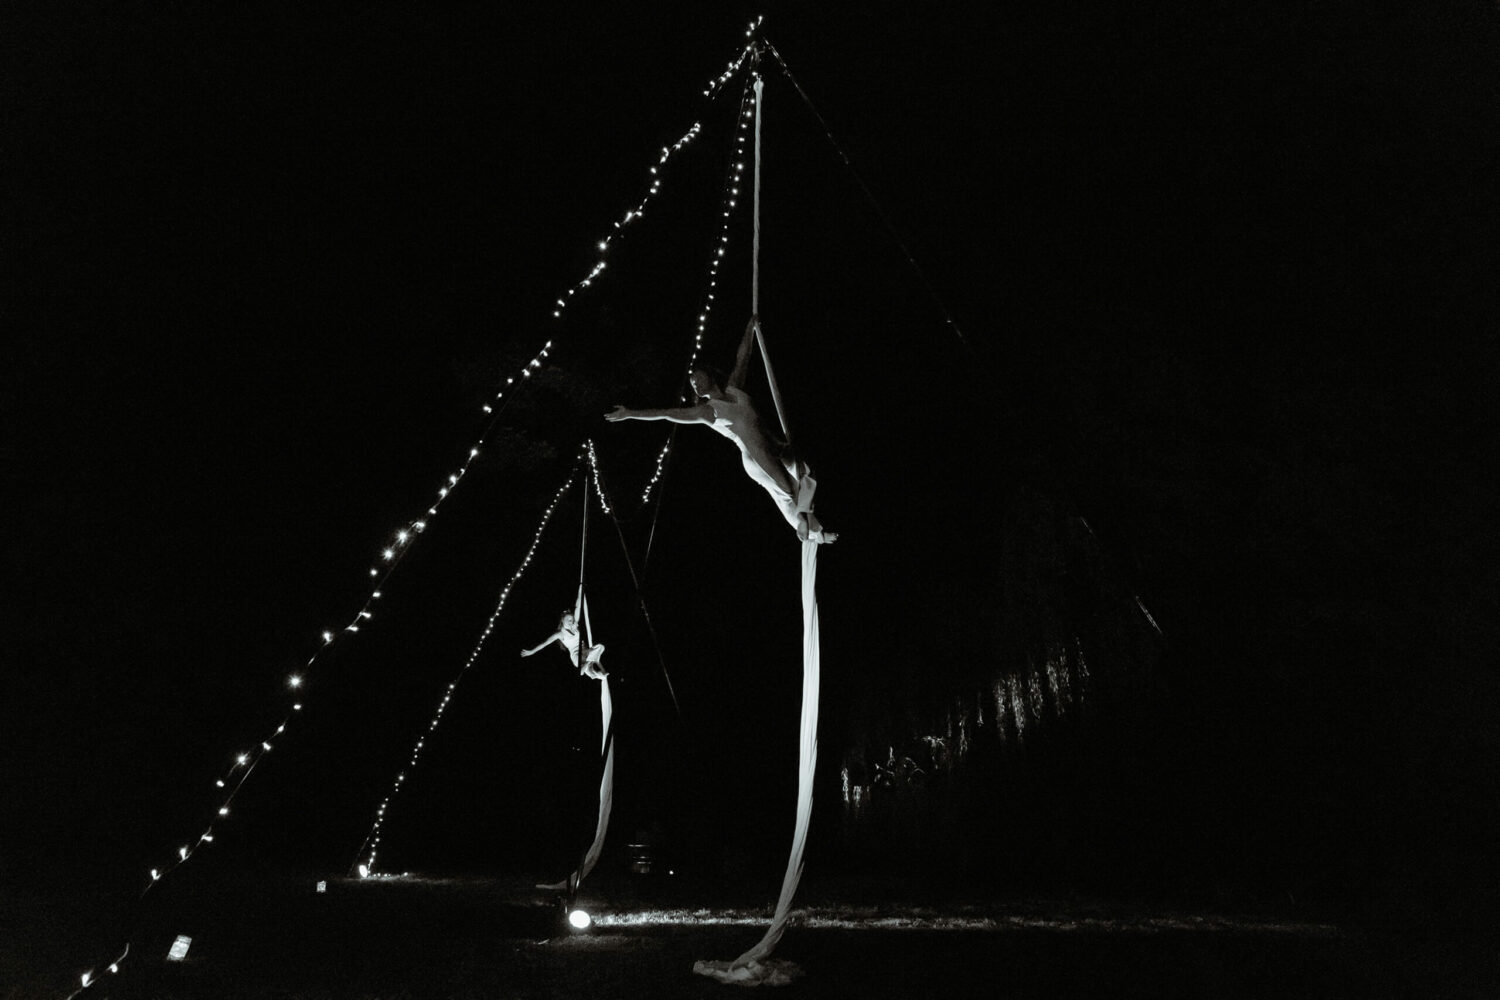 Marine Briens - Artiste de Cirque